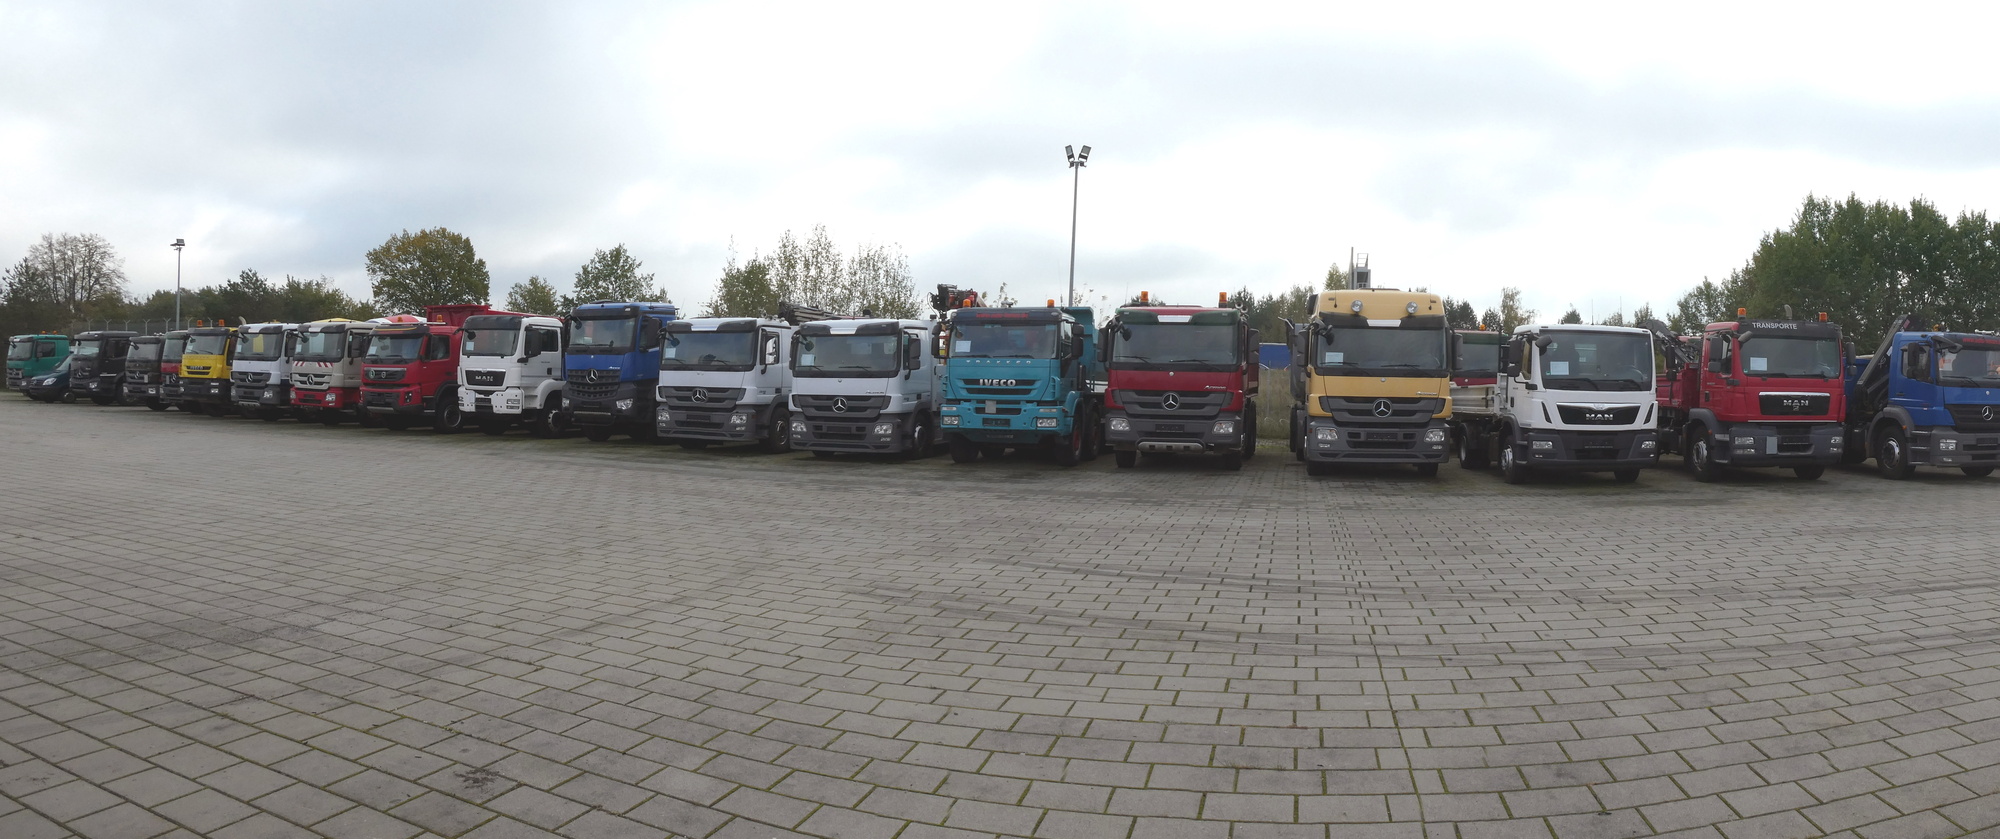 Henze Truck GmbH - объявления о продаже undefined: фото 1